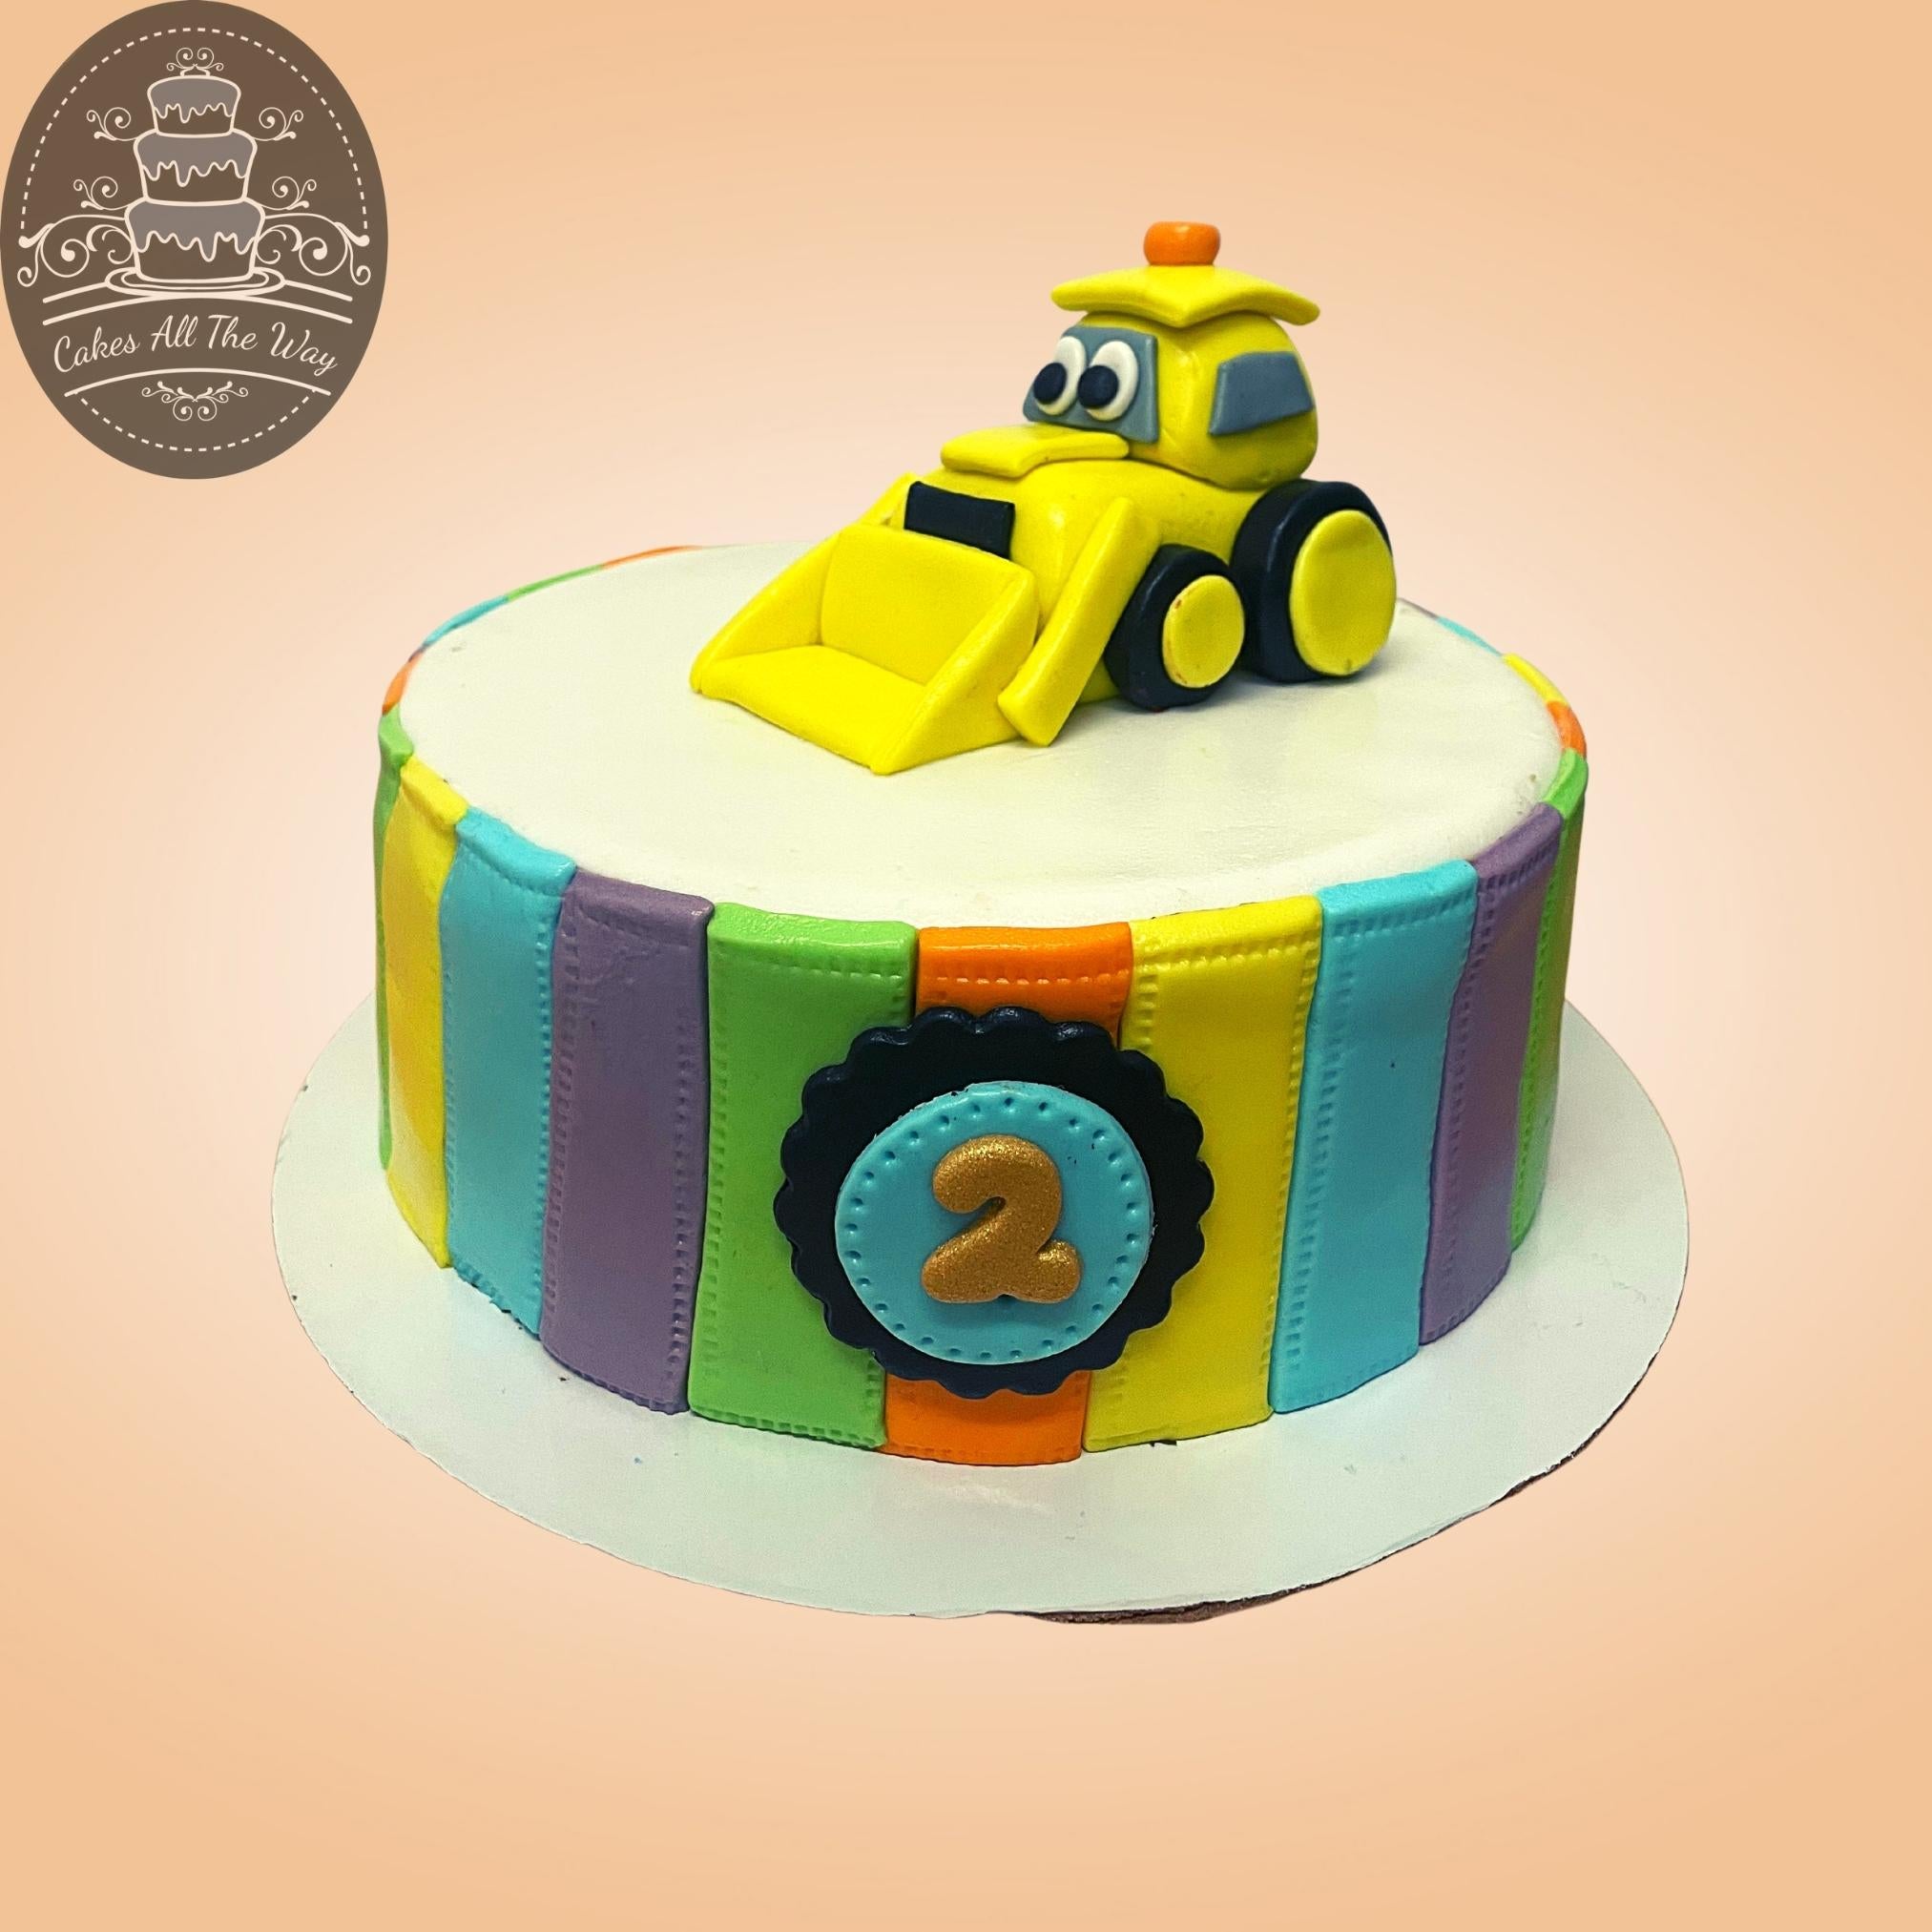 1-BUTTERFLY CAKE 2-CONSTRUCTION JCB CAKE 3-CHOCOLATE LOADED CAKE  4-ALCOHOLIC MAN CAKE 5-CAR AND APPLE LOVER CAKE #customcake… | Instagram